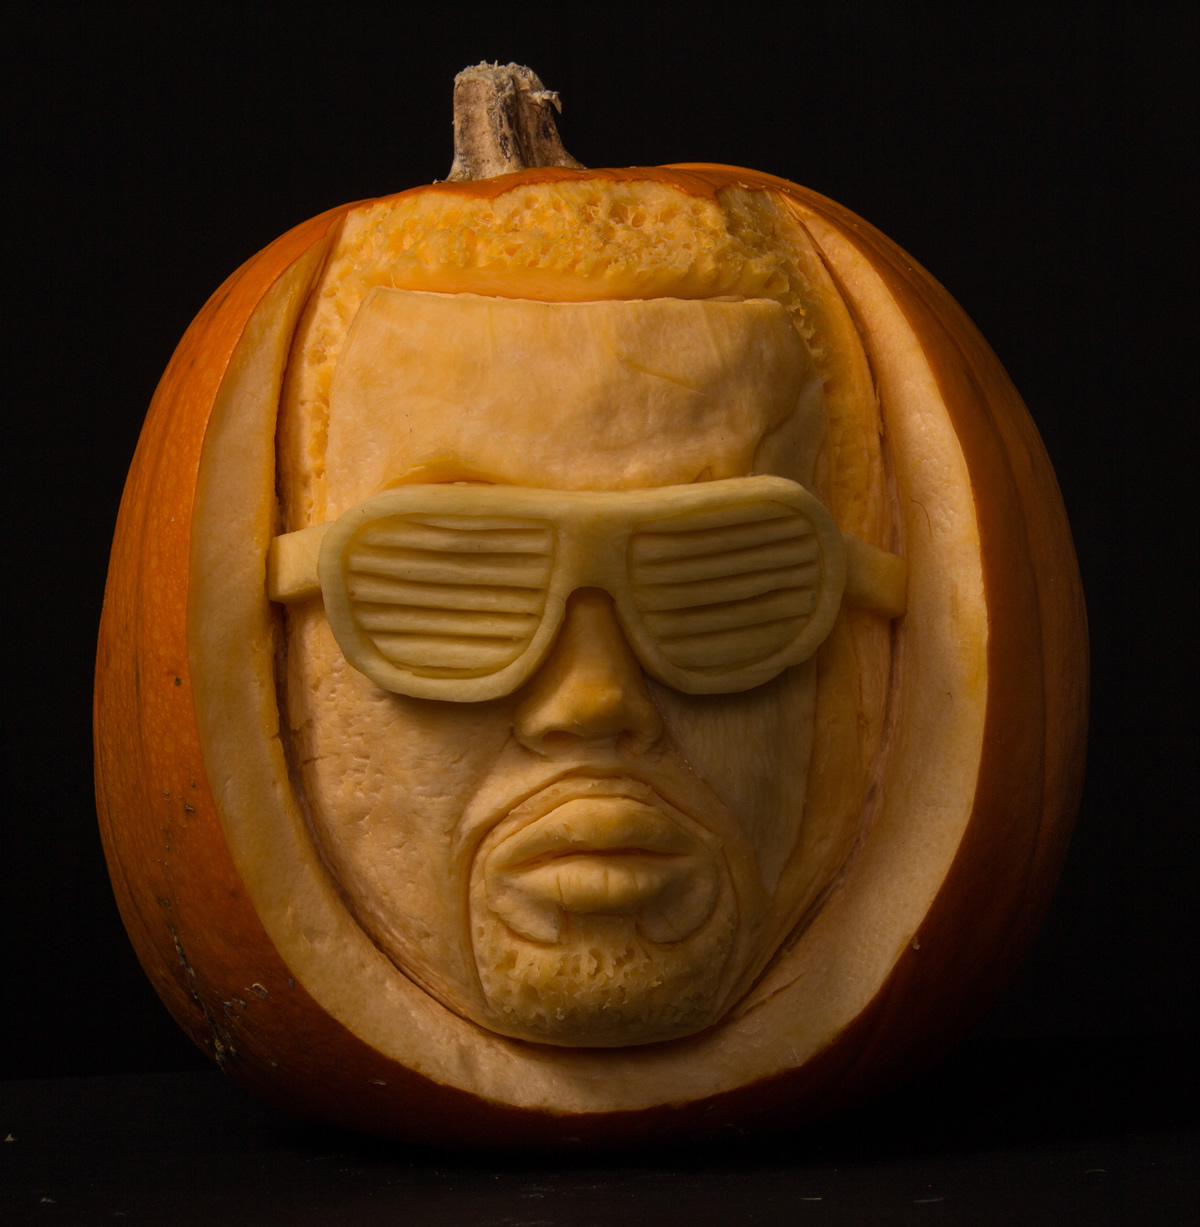 Kanye West's famous face pumpkin carving